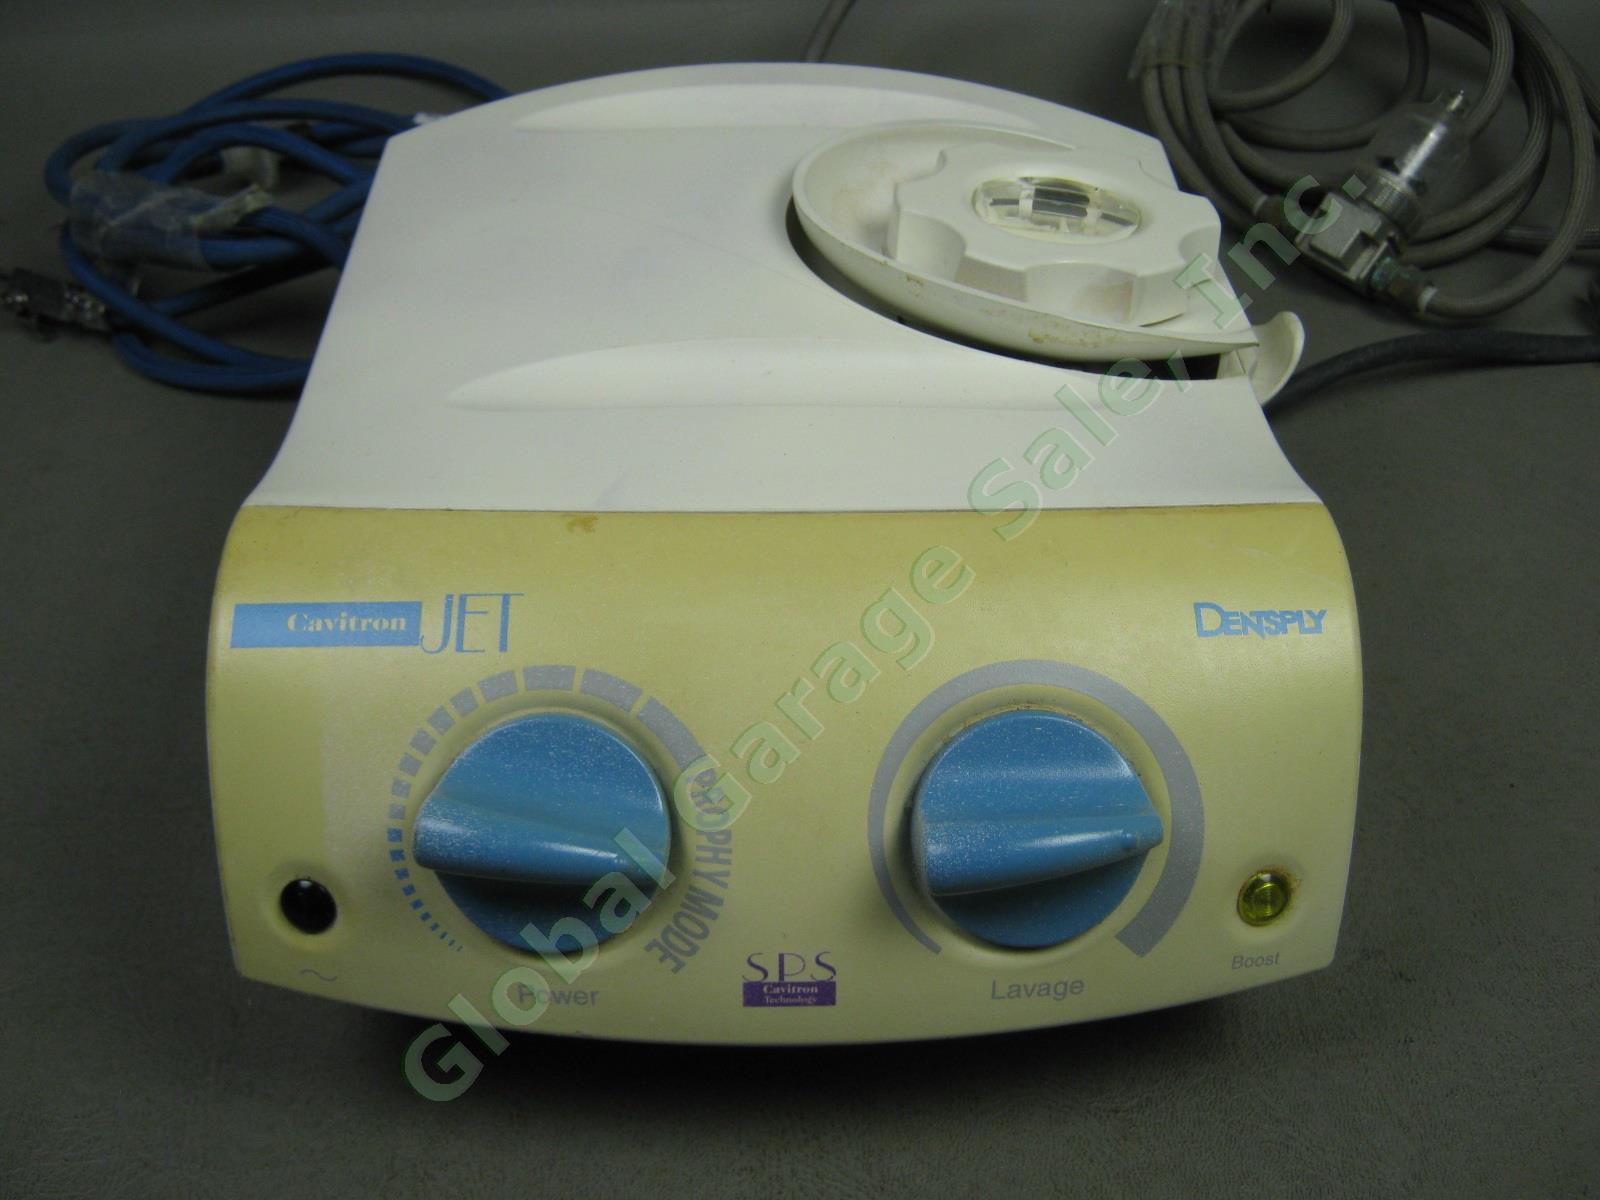 Dentsply Cavitron Jet SPS Prophy Ultrasonic Dental Scaler & Air Polishing System 1